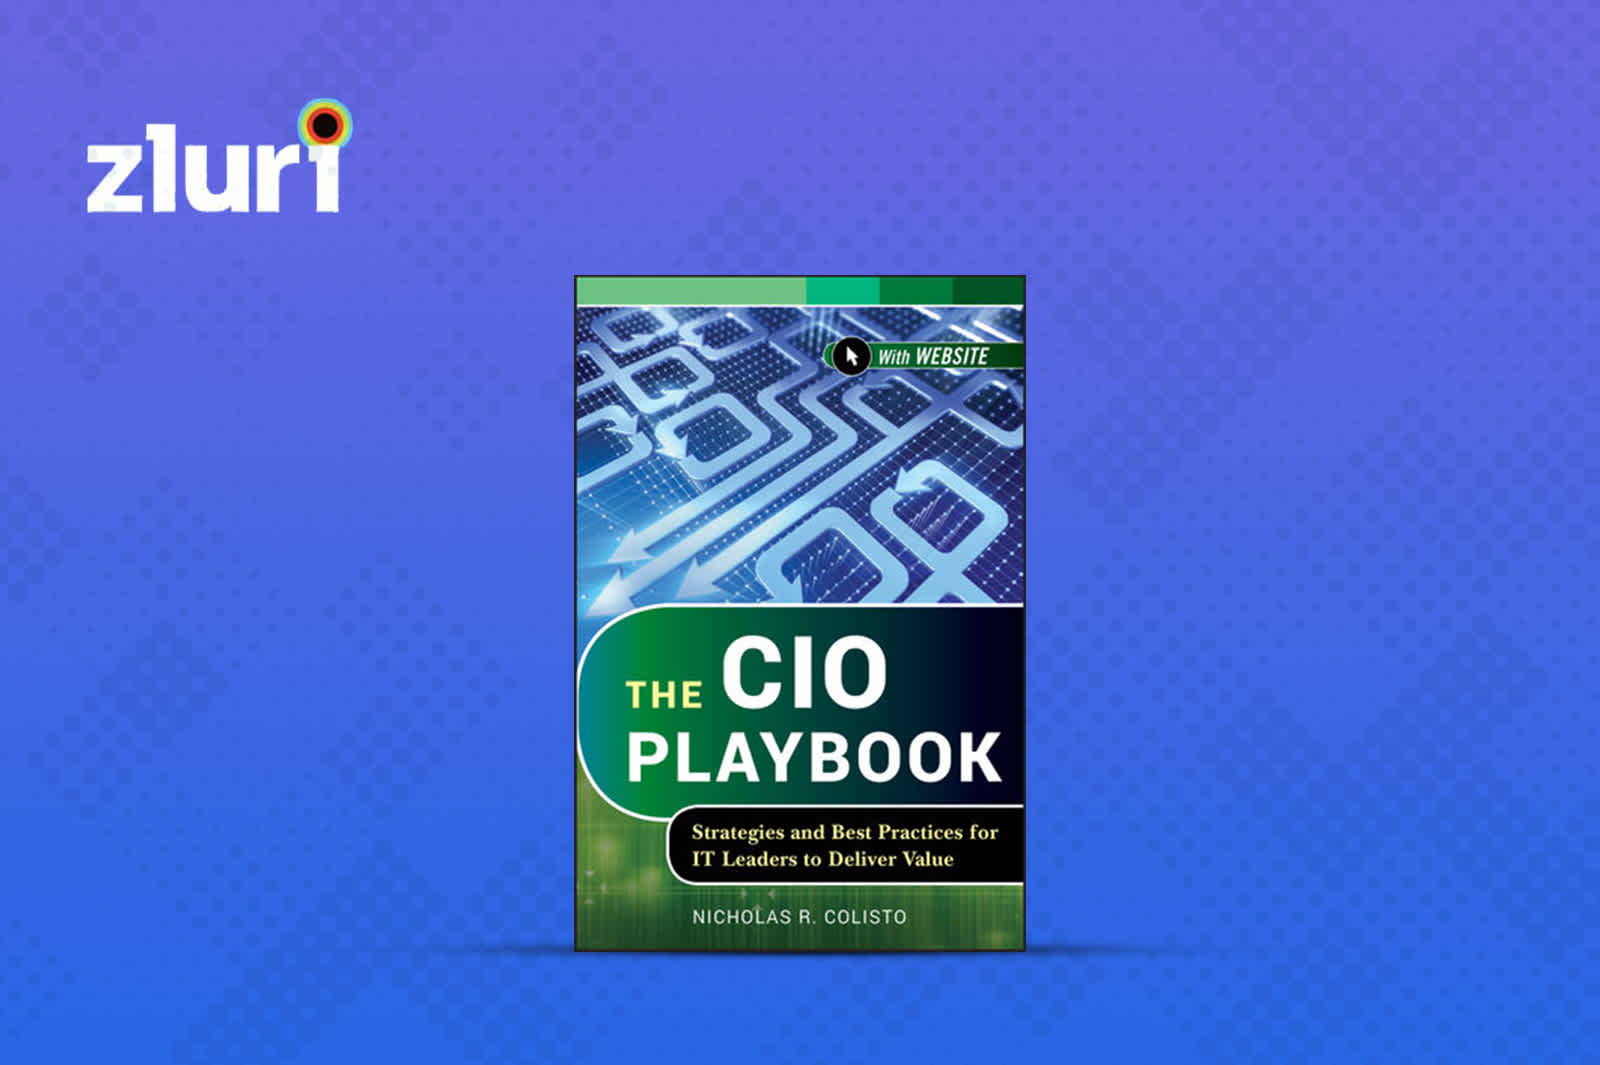  The CIO Playbook